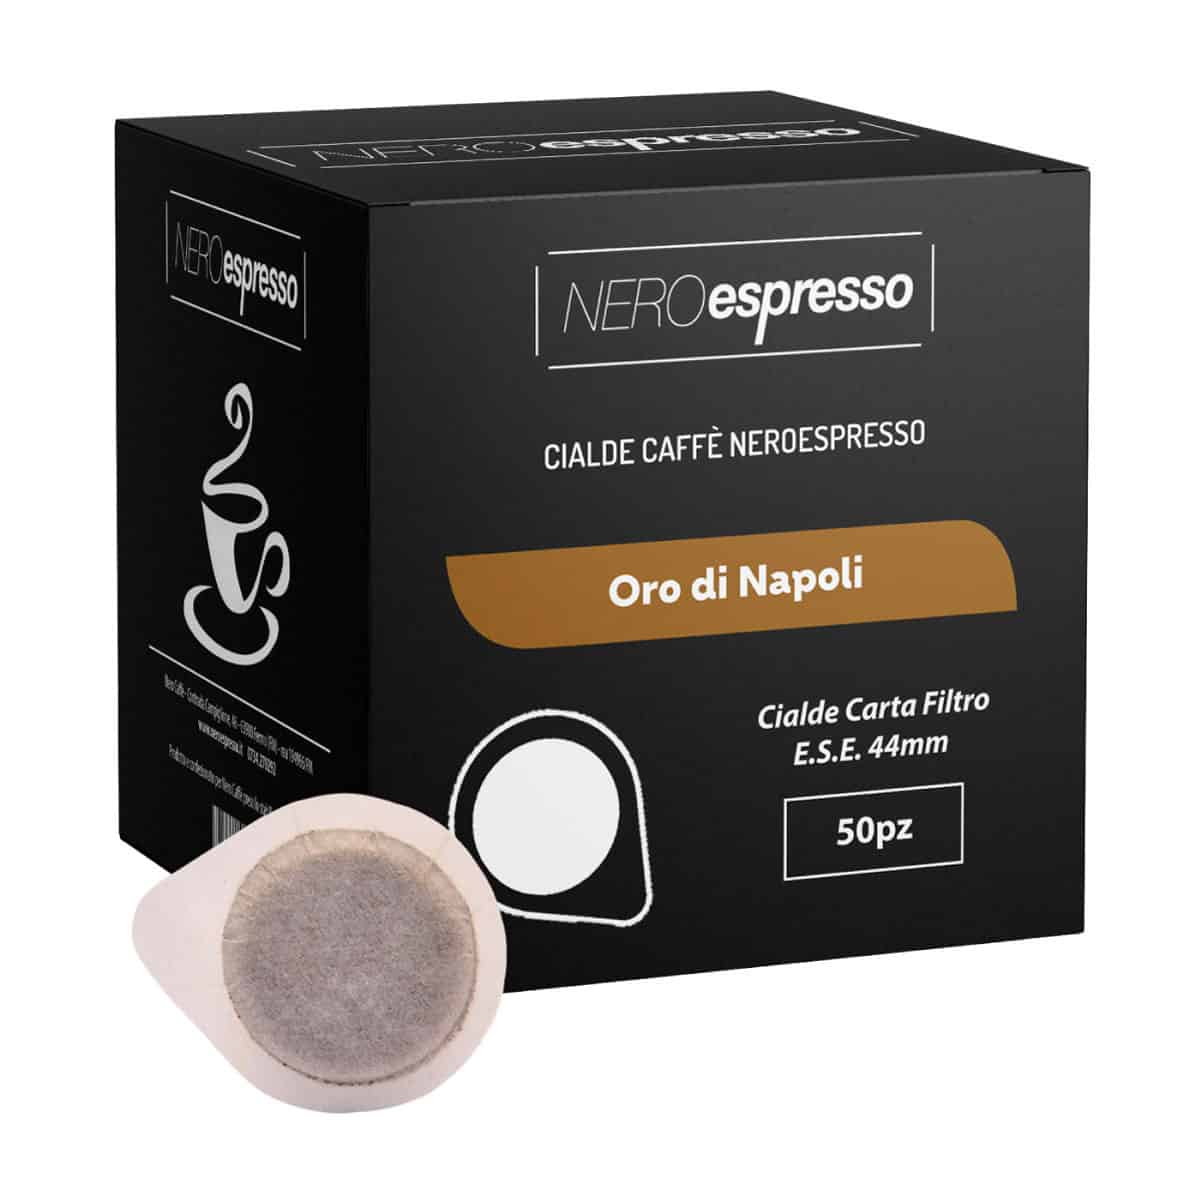 Espresso Napoli de Dongiò Caffè